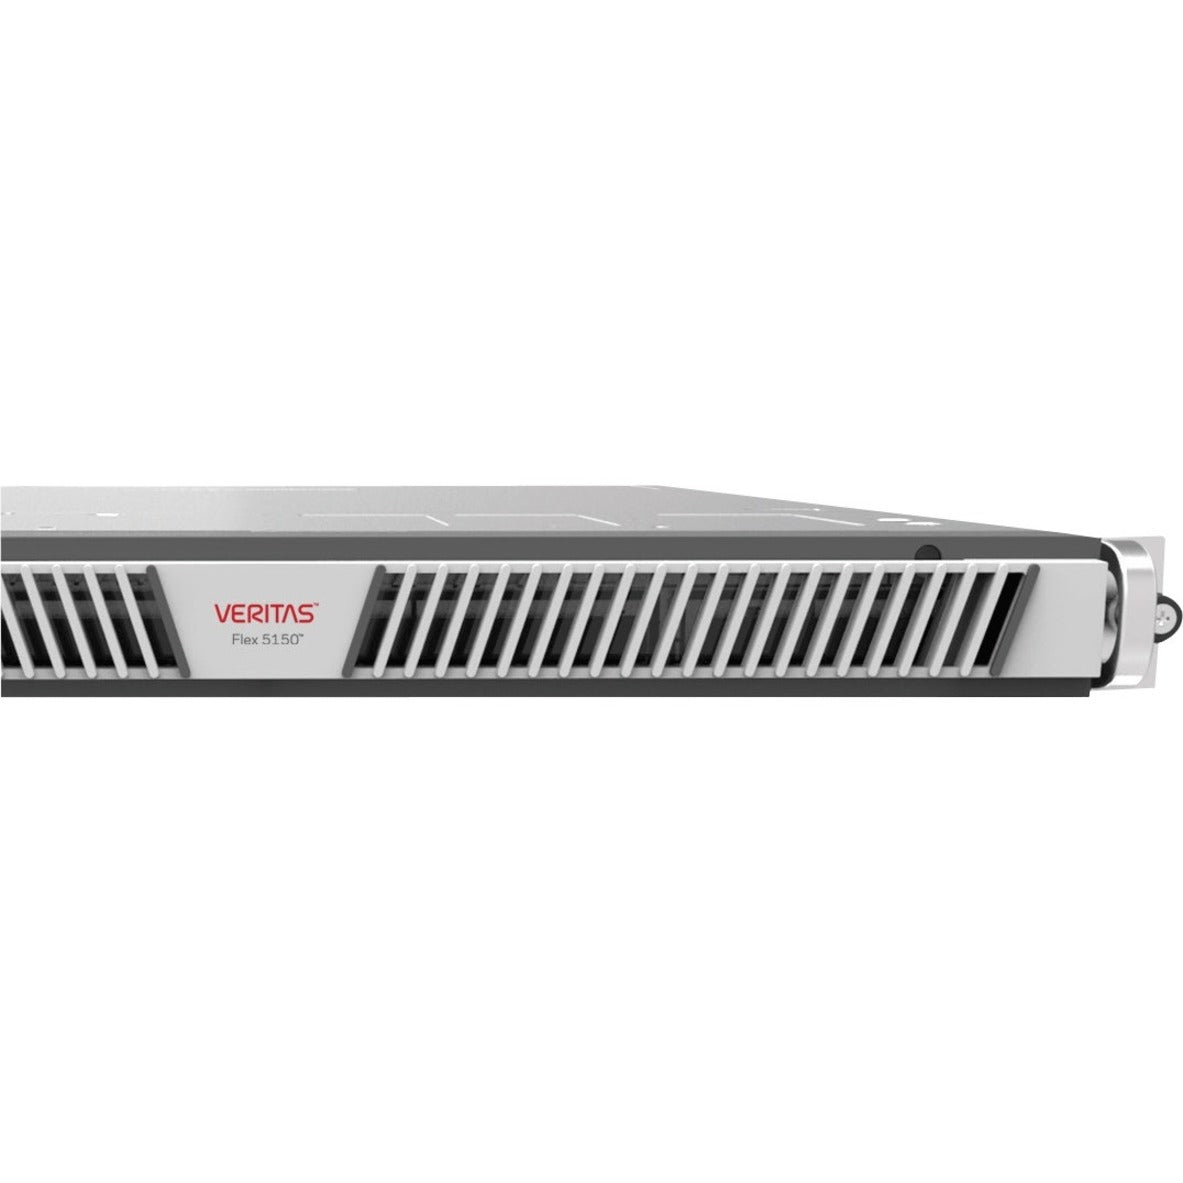 Veritas 26114-M0032 Flex System 5150 NAS Storage System, 15TB Total Hard Drive Capacity Installed, 12Gb/s SAS Controller, 8 Network (RJ-45) Ports